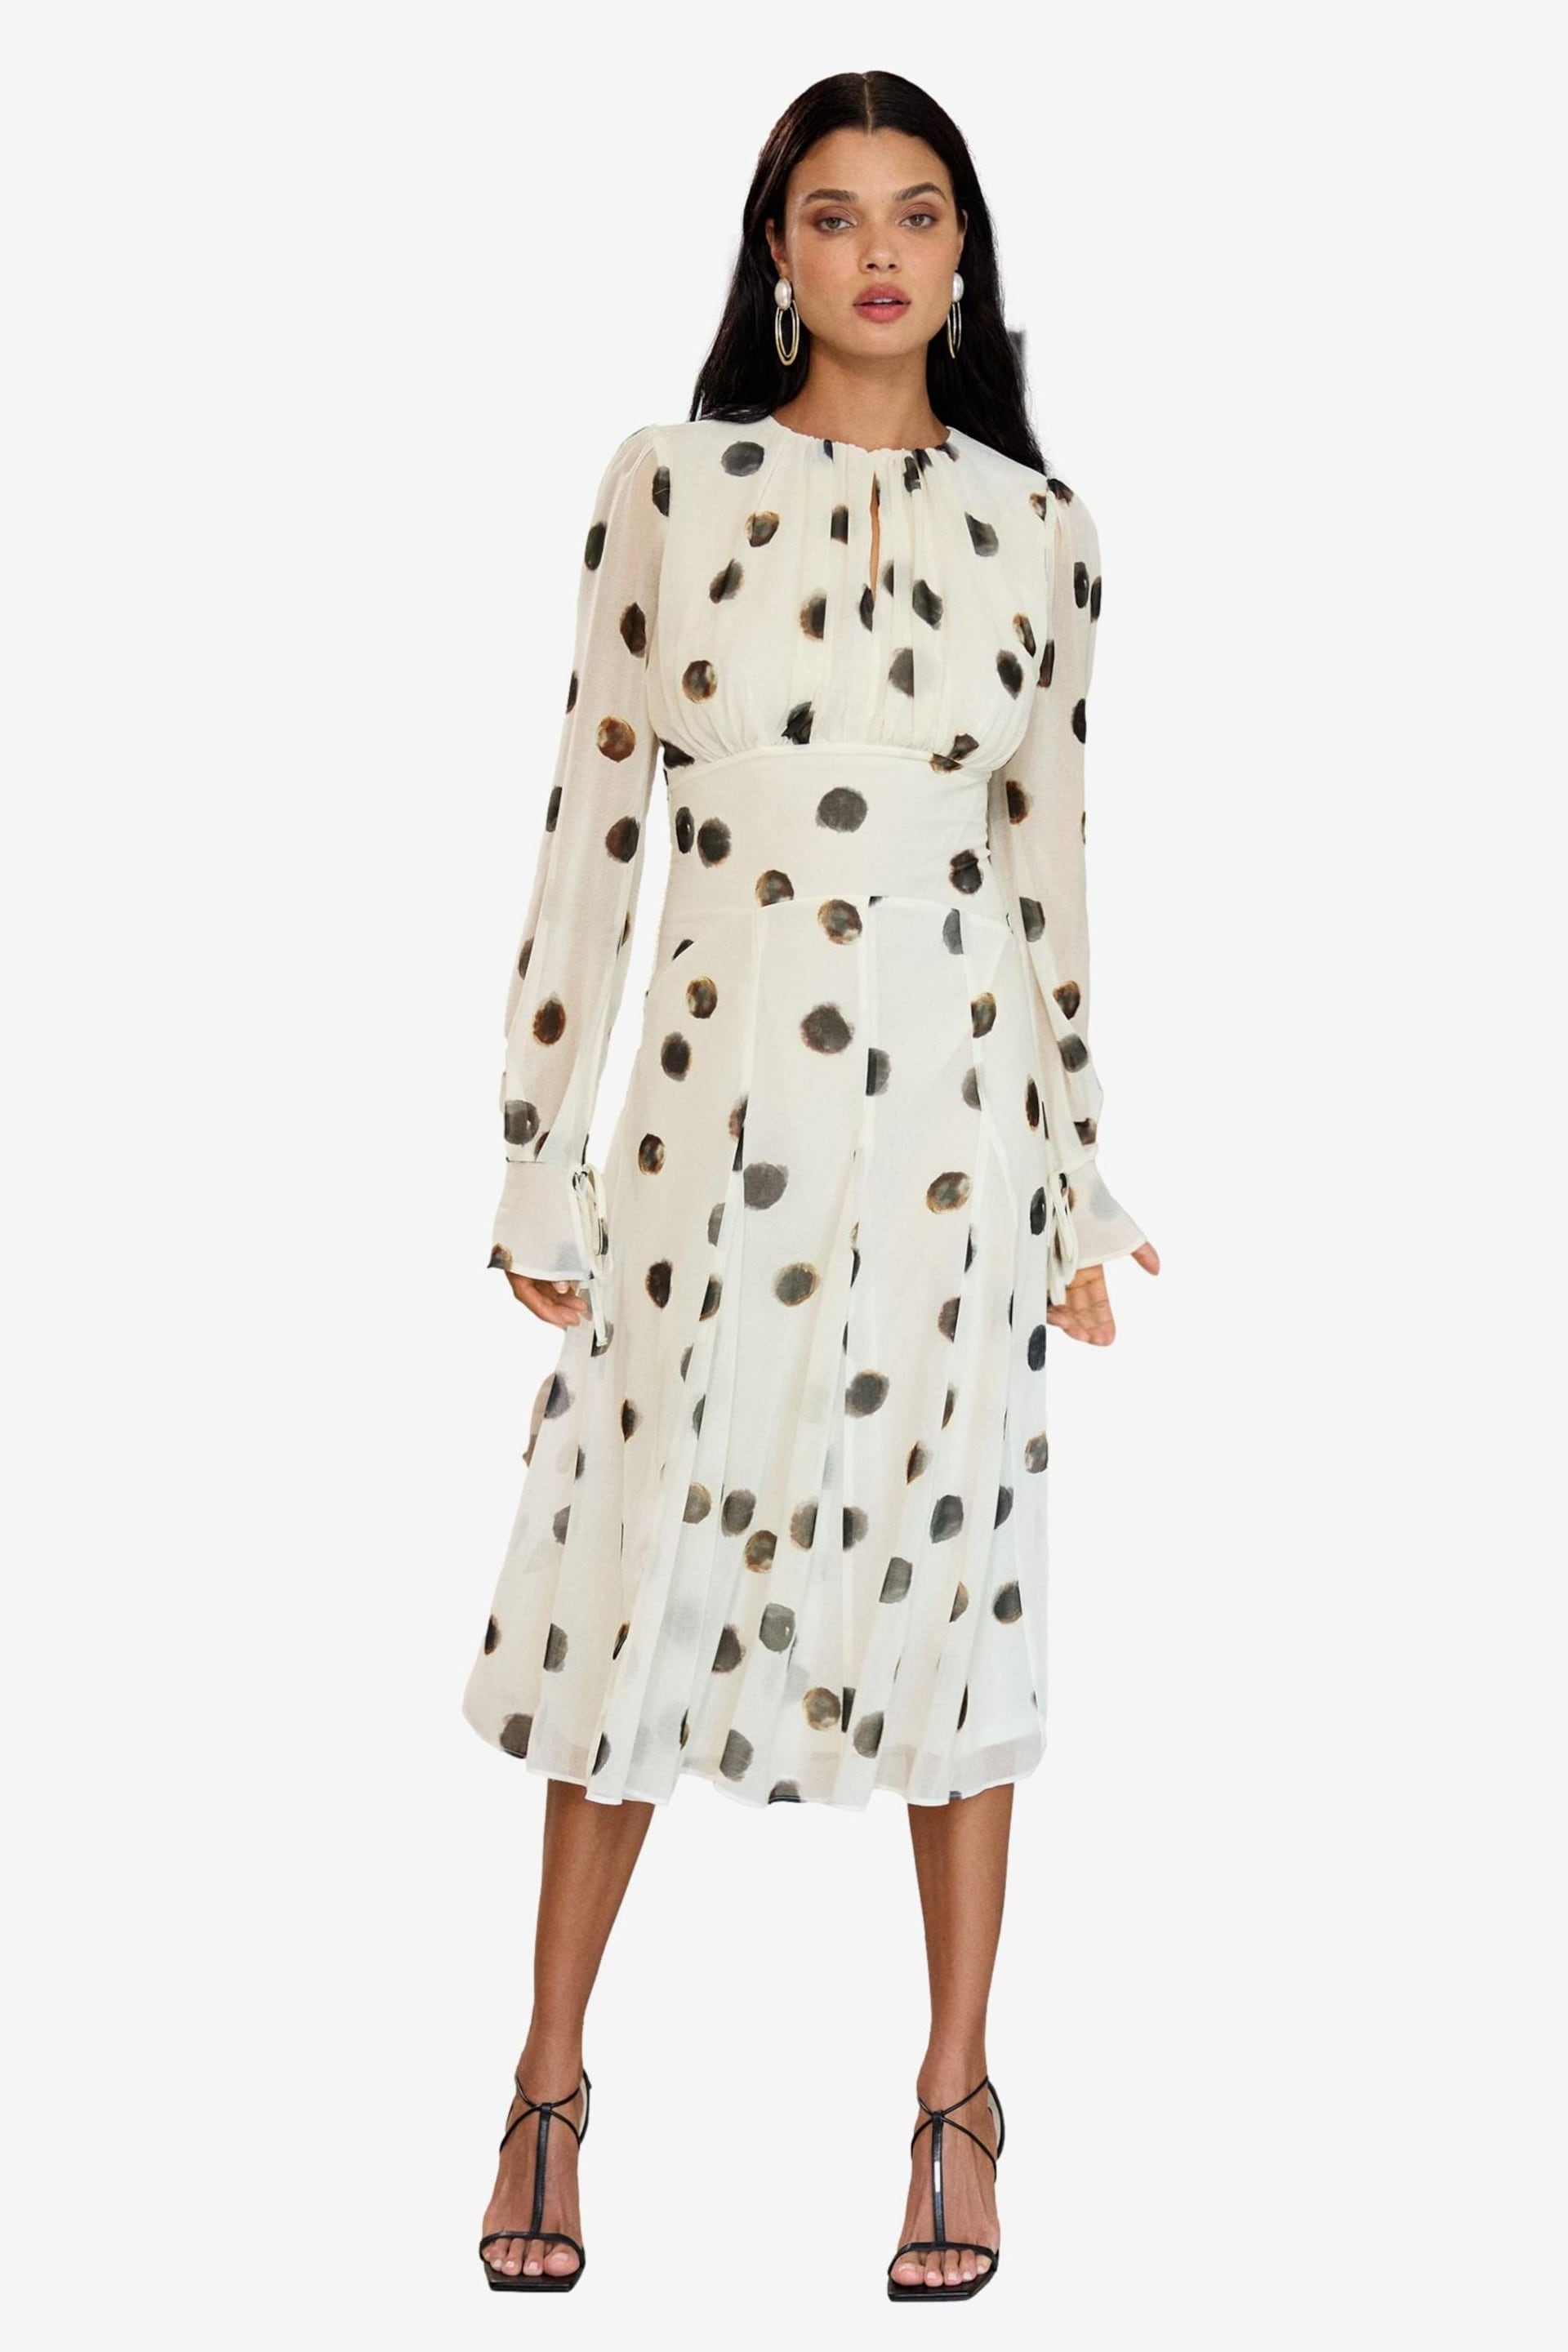 Lipsy Black/White Petite Long Sleeve Gathered Waist Spot Midi Dress - Image 5 of 5